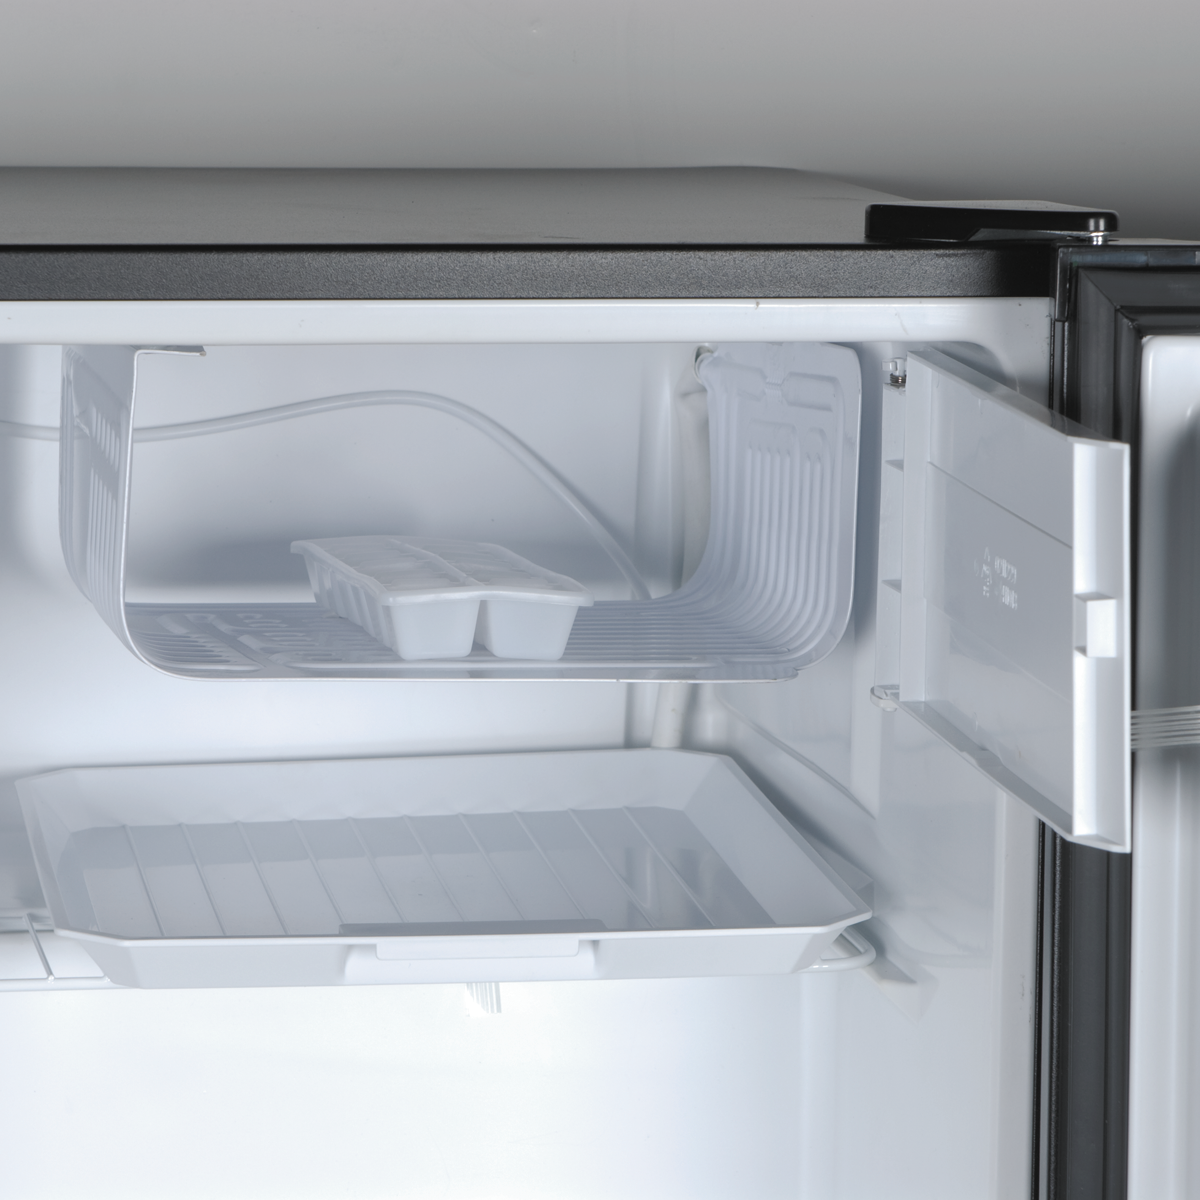 haier fridge model dd410rs instruction manual